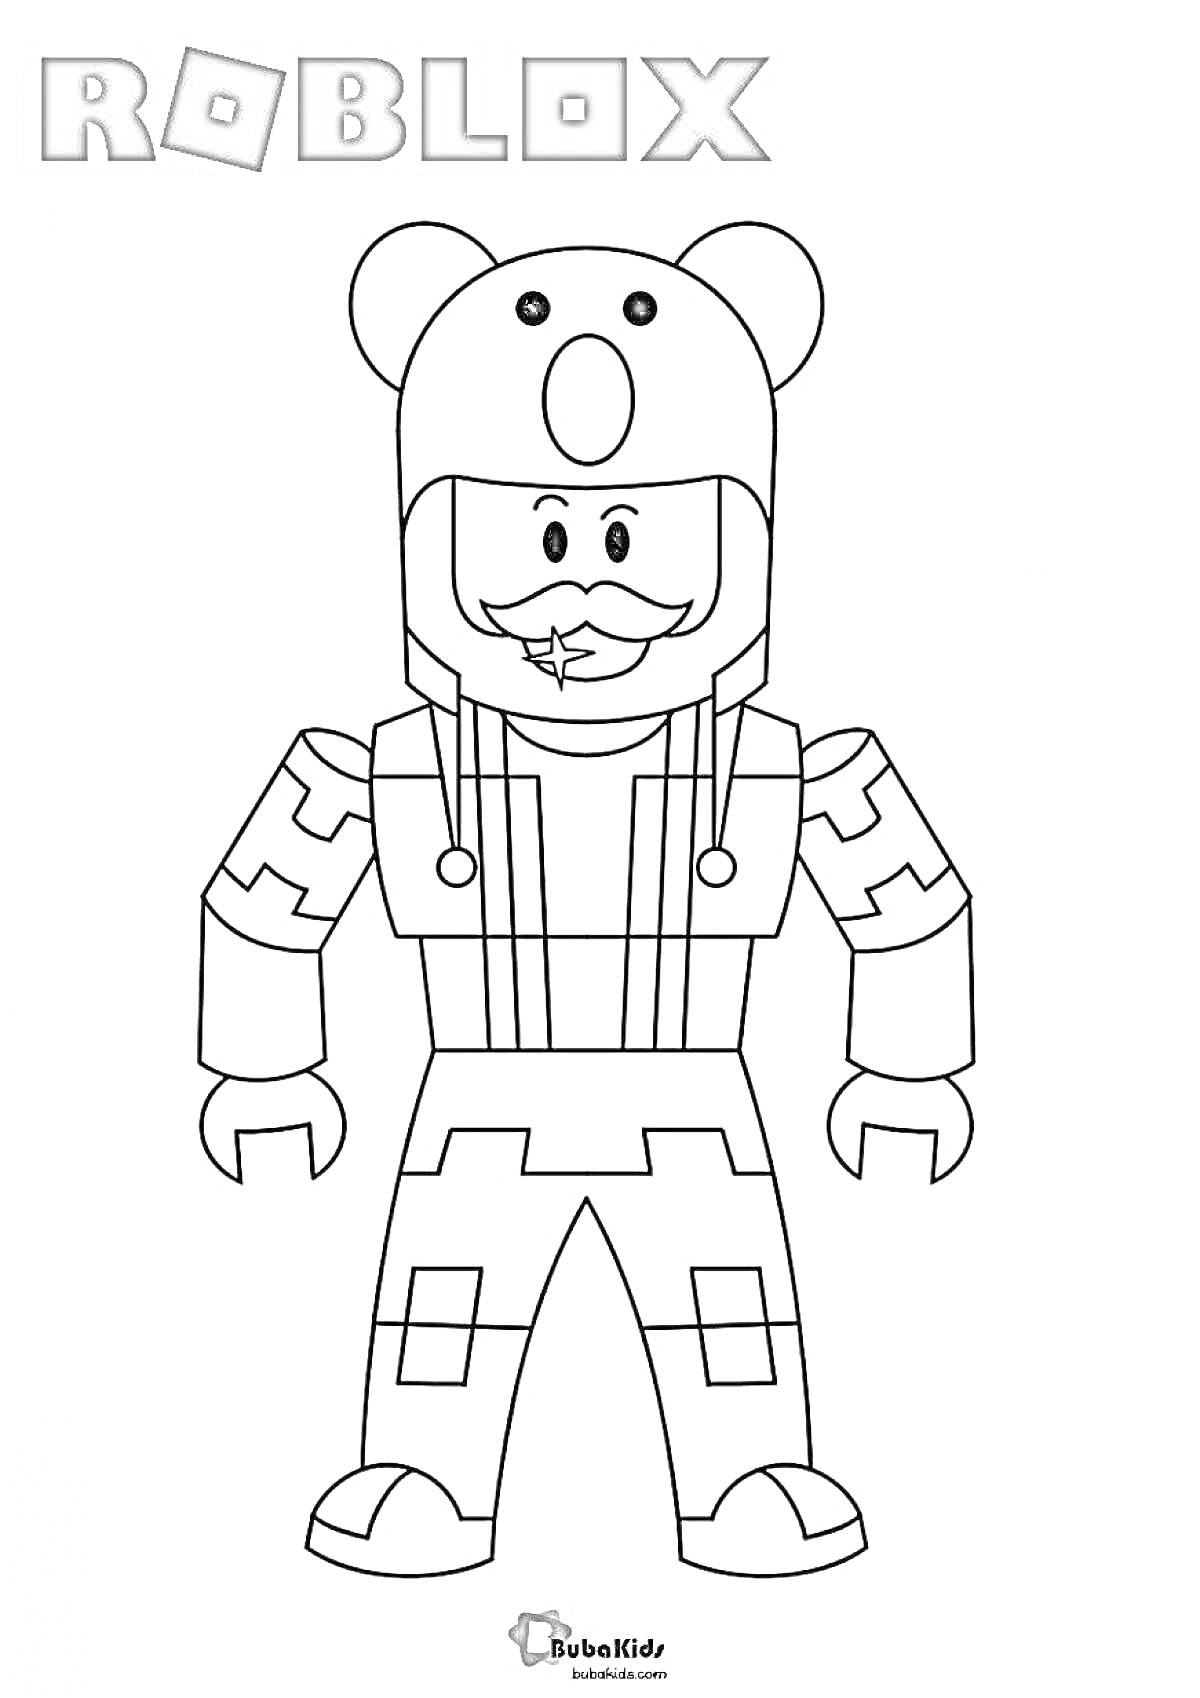 Раскраска Персонаж Roblox в костюме медведя с усами